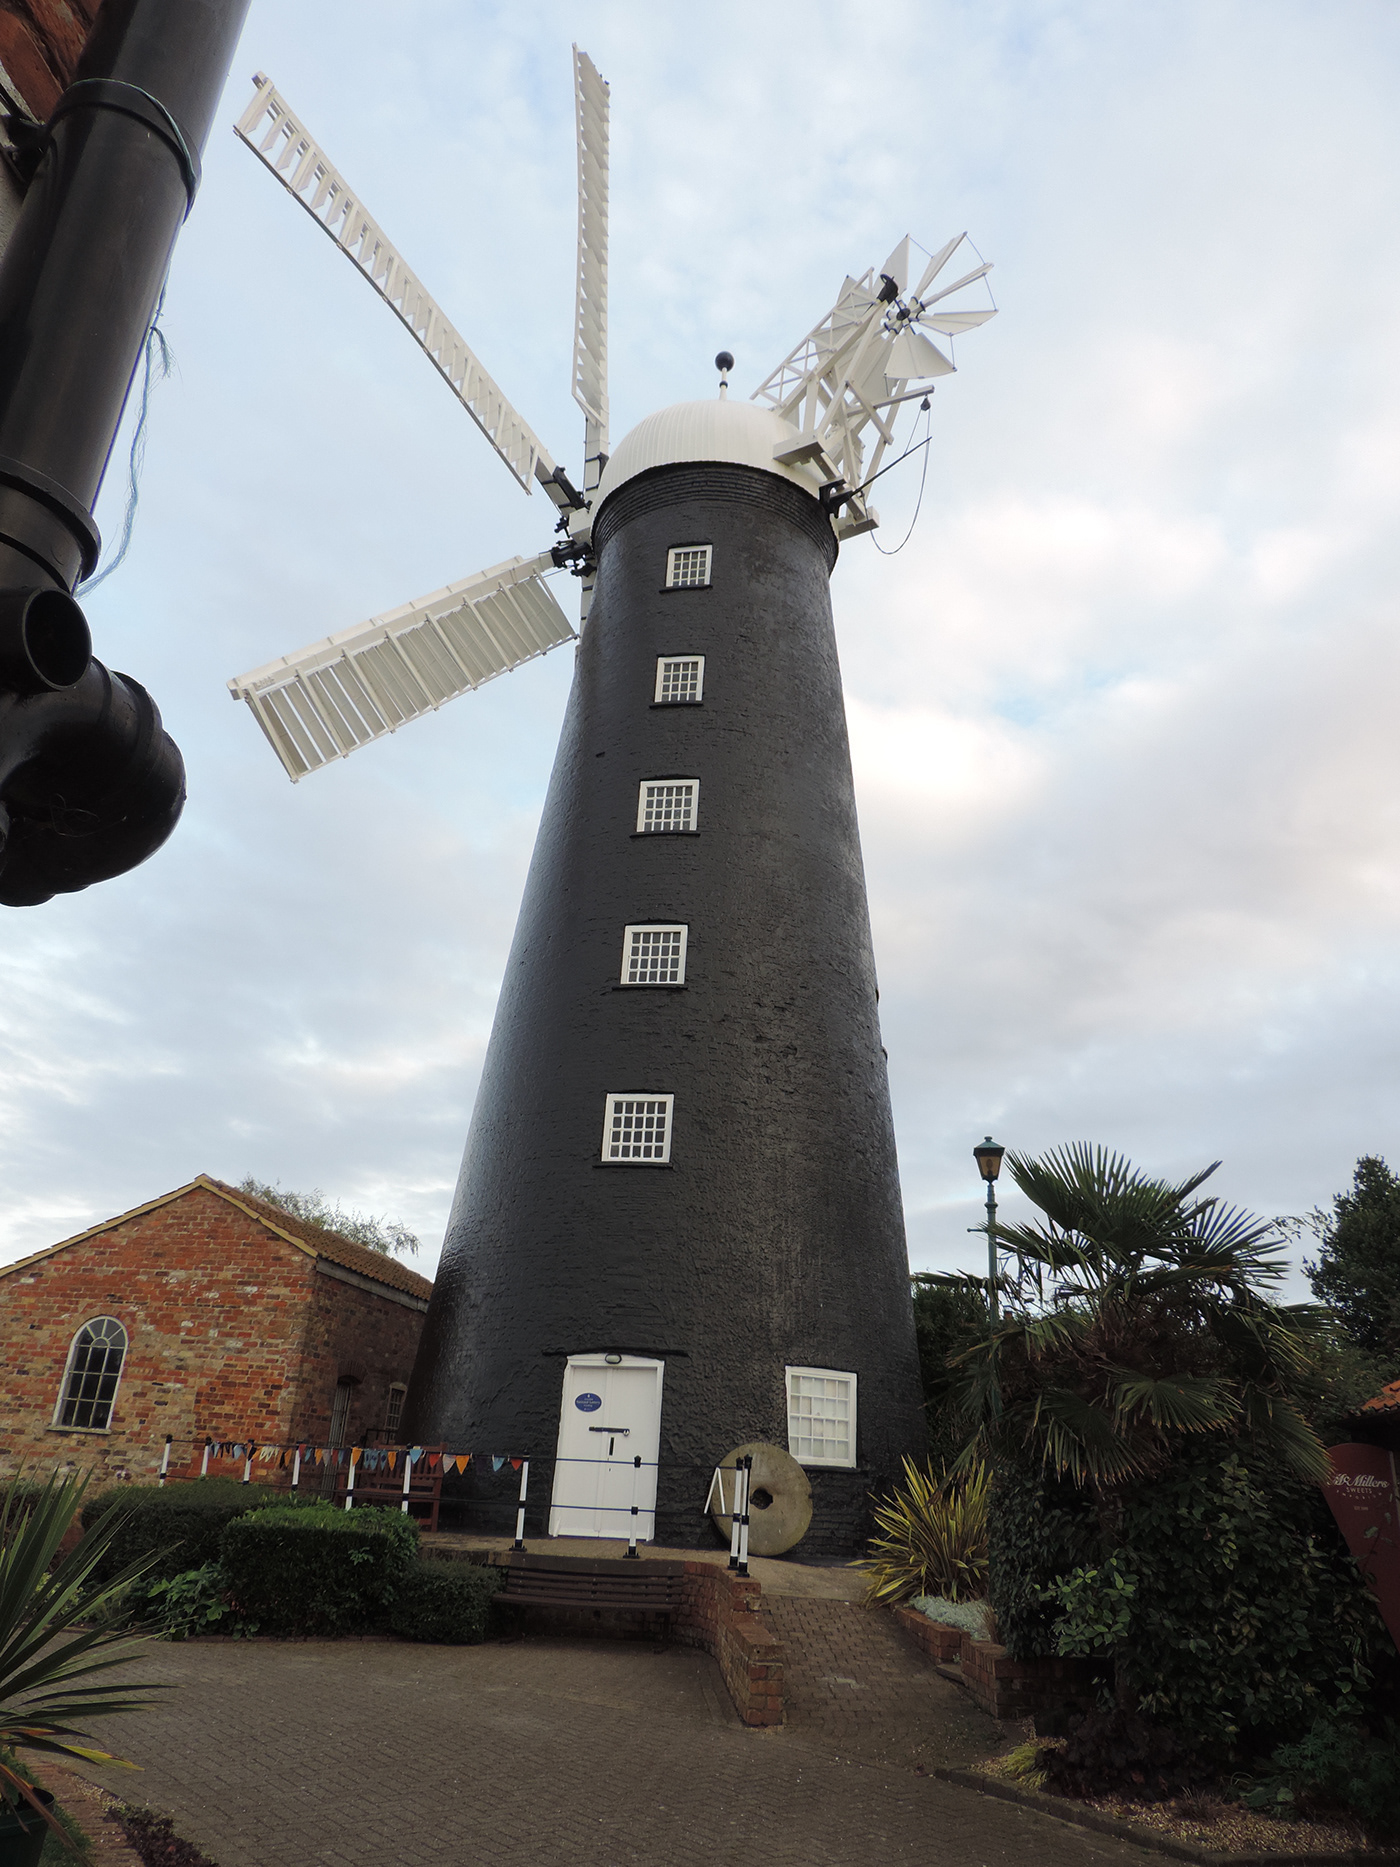 north east lincolnshire Waltham windmill